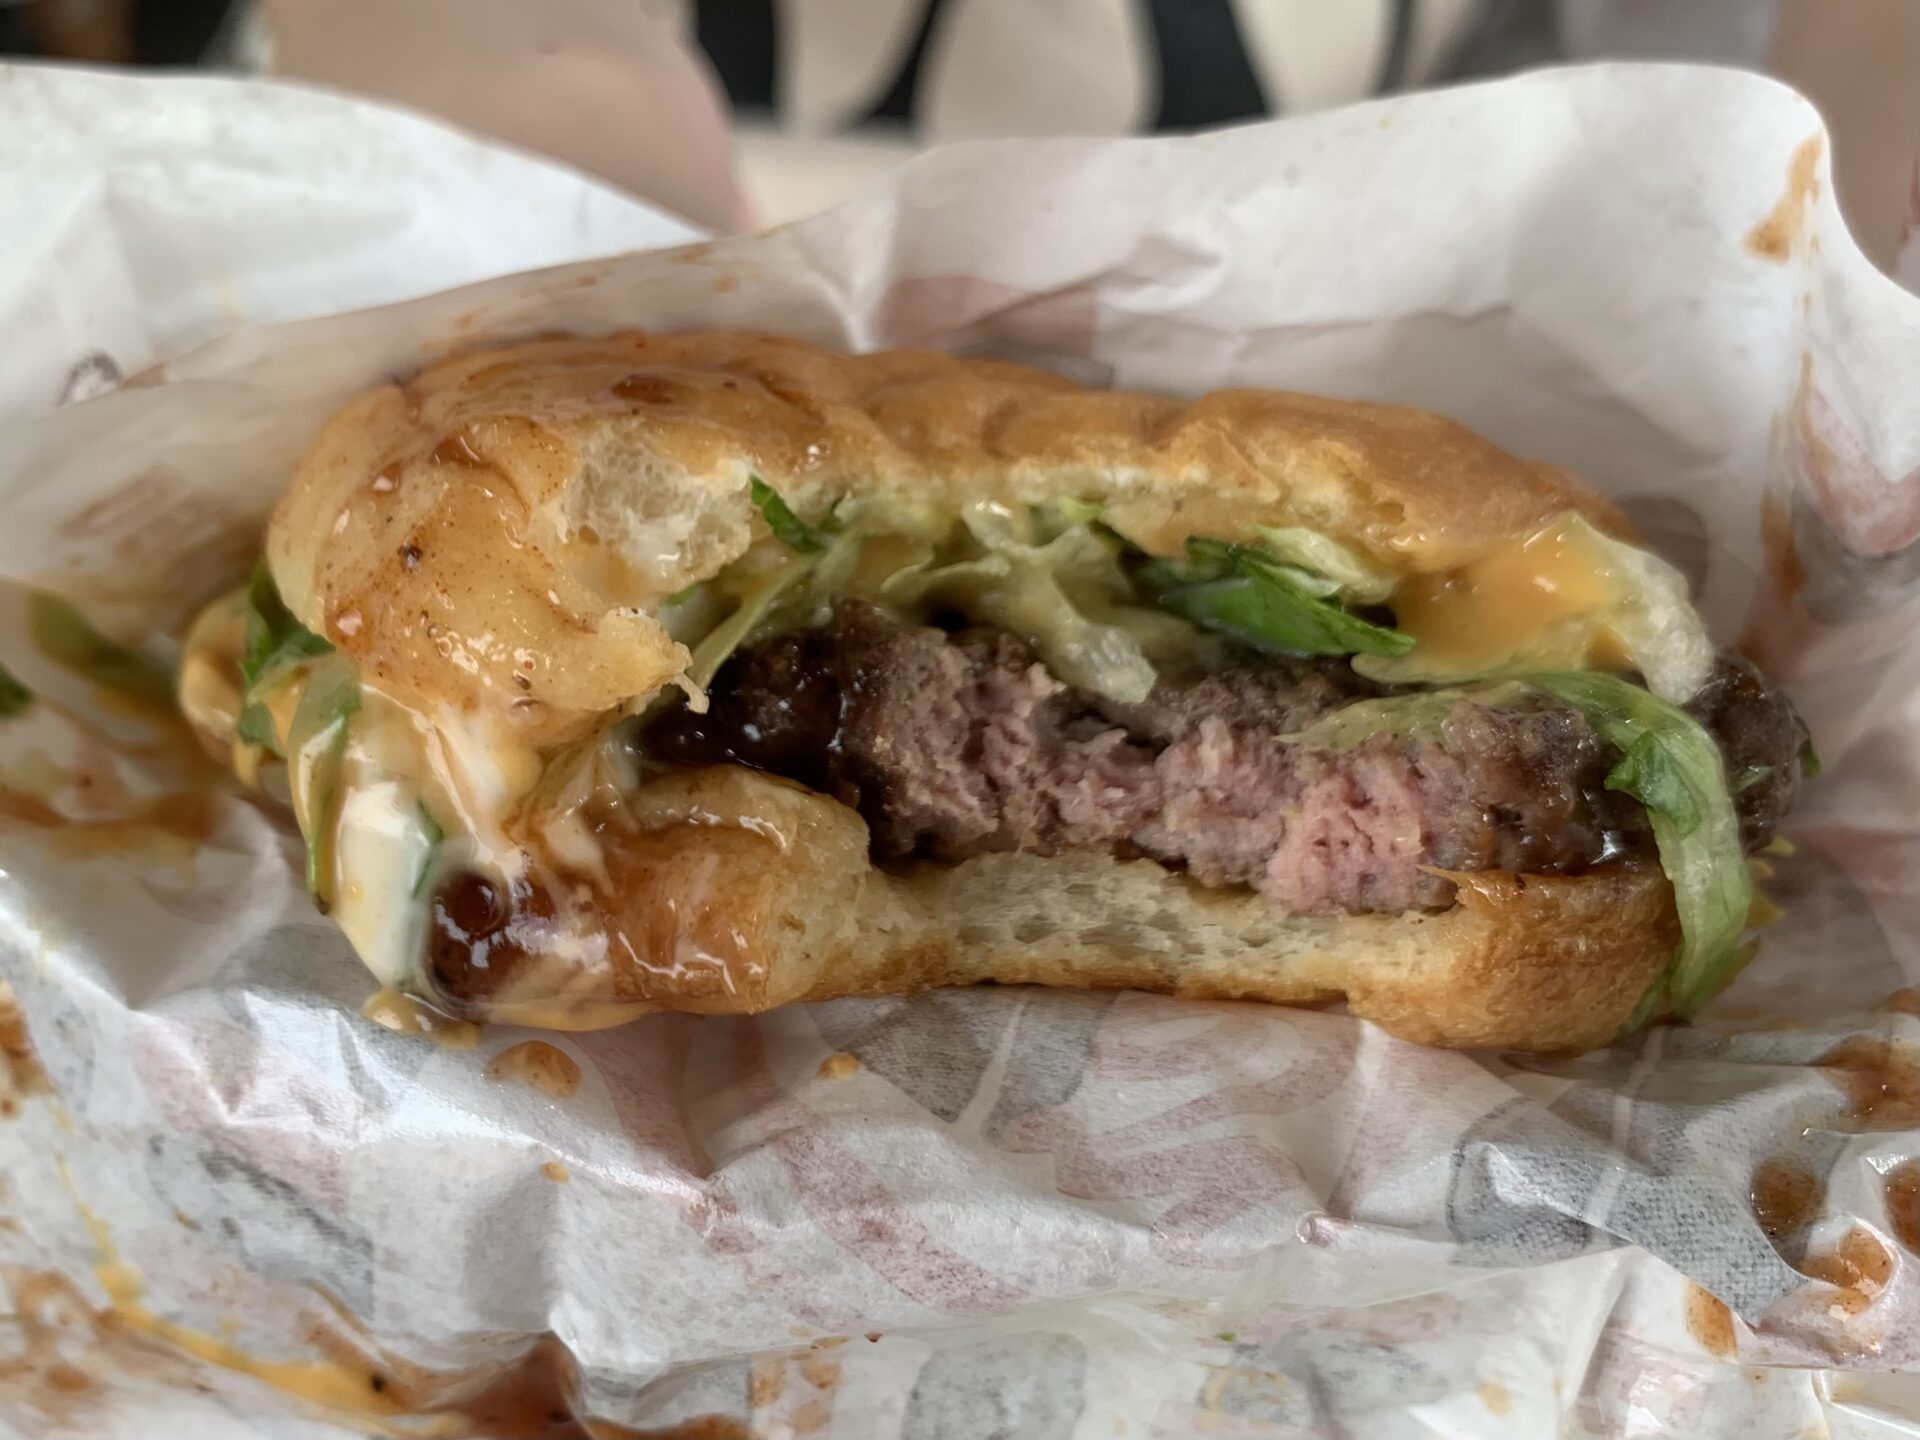 Dhon Burger - Inside the BigMok burger